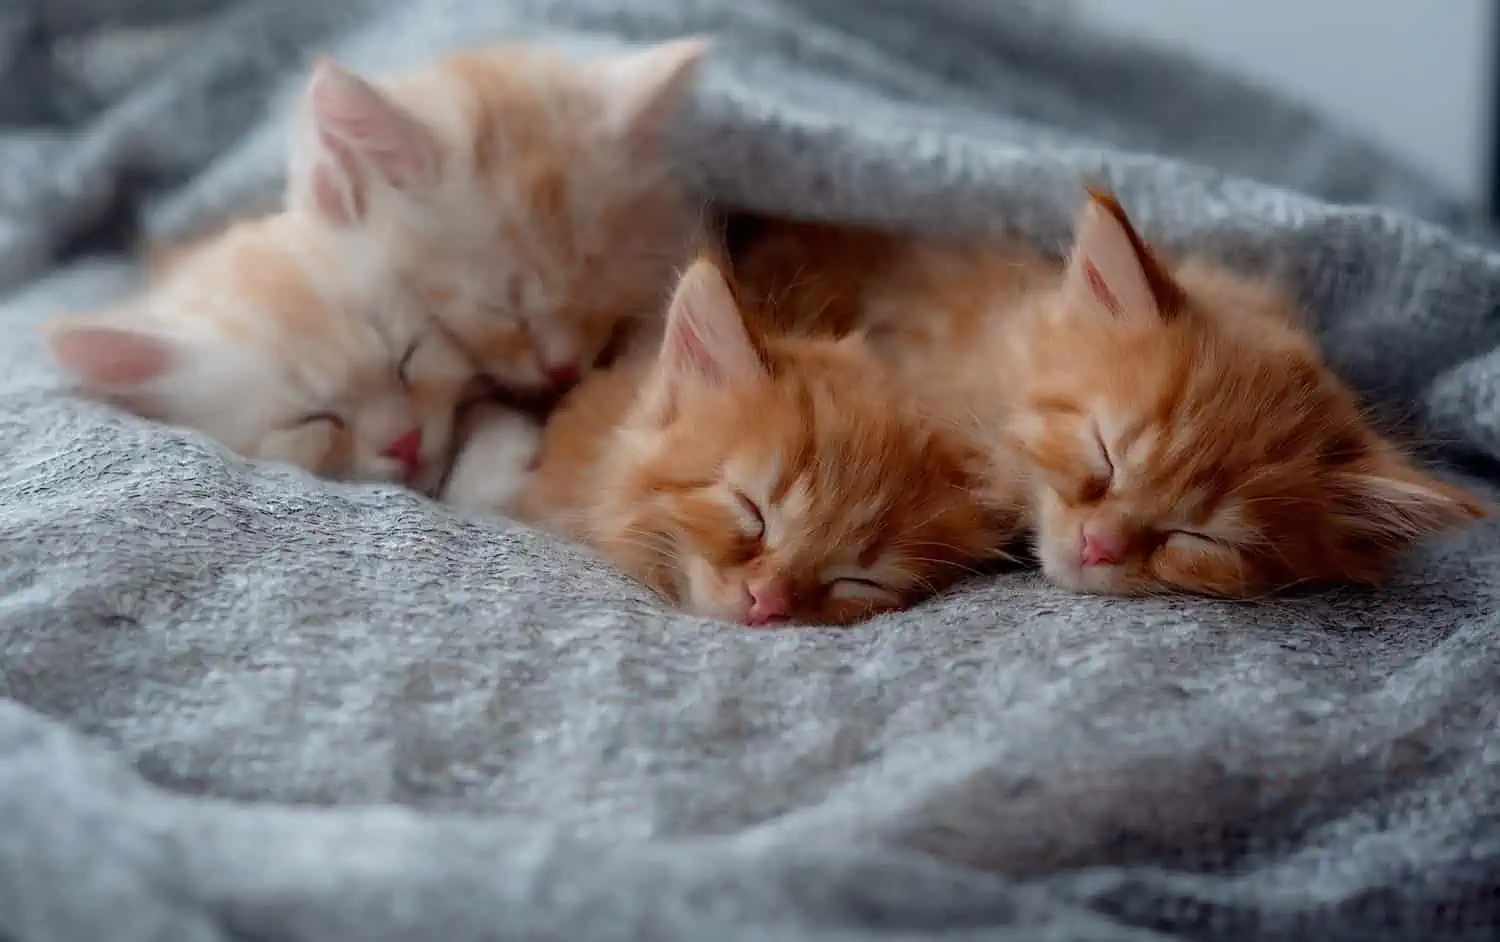 Kittens sleeping on a fur blanket